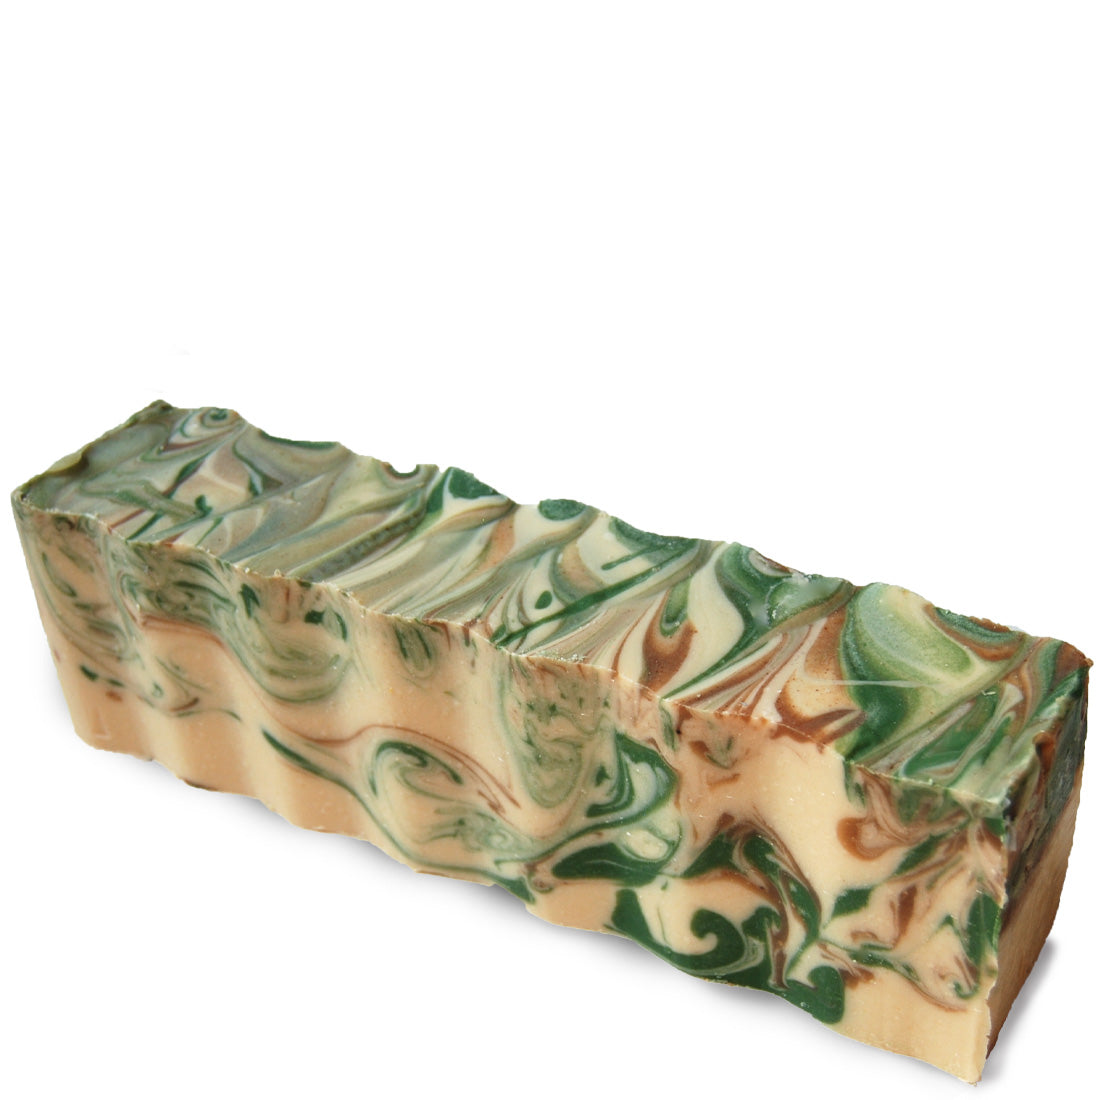 Cream, green and brown wavy rectangular 45 ounce brick of clove-mint scented Zum Bar Soap